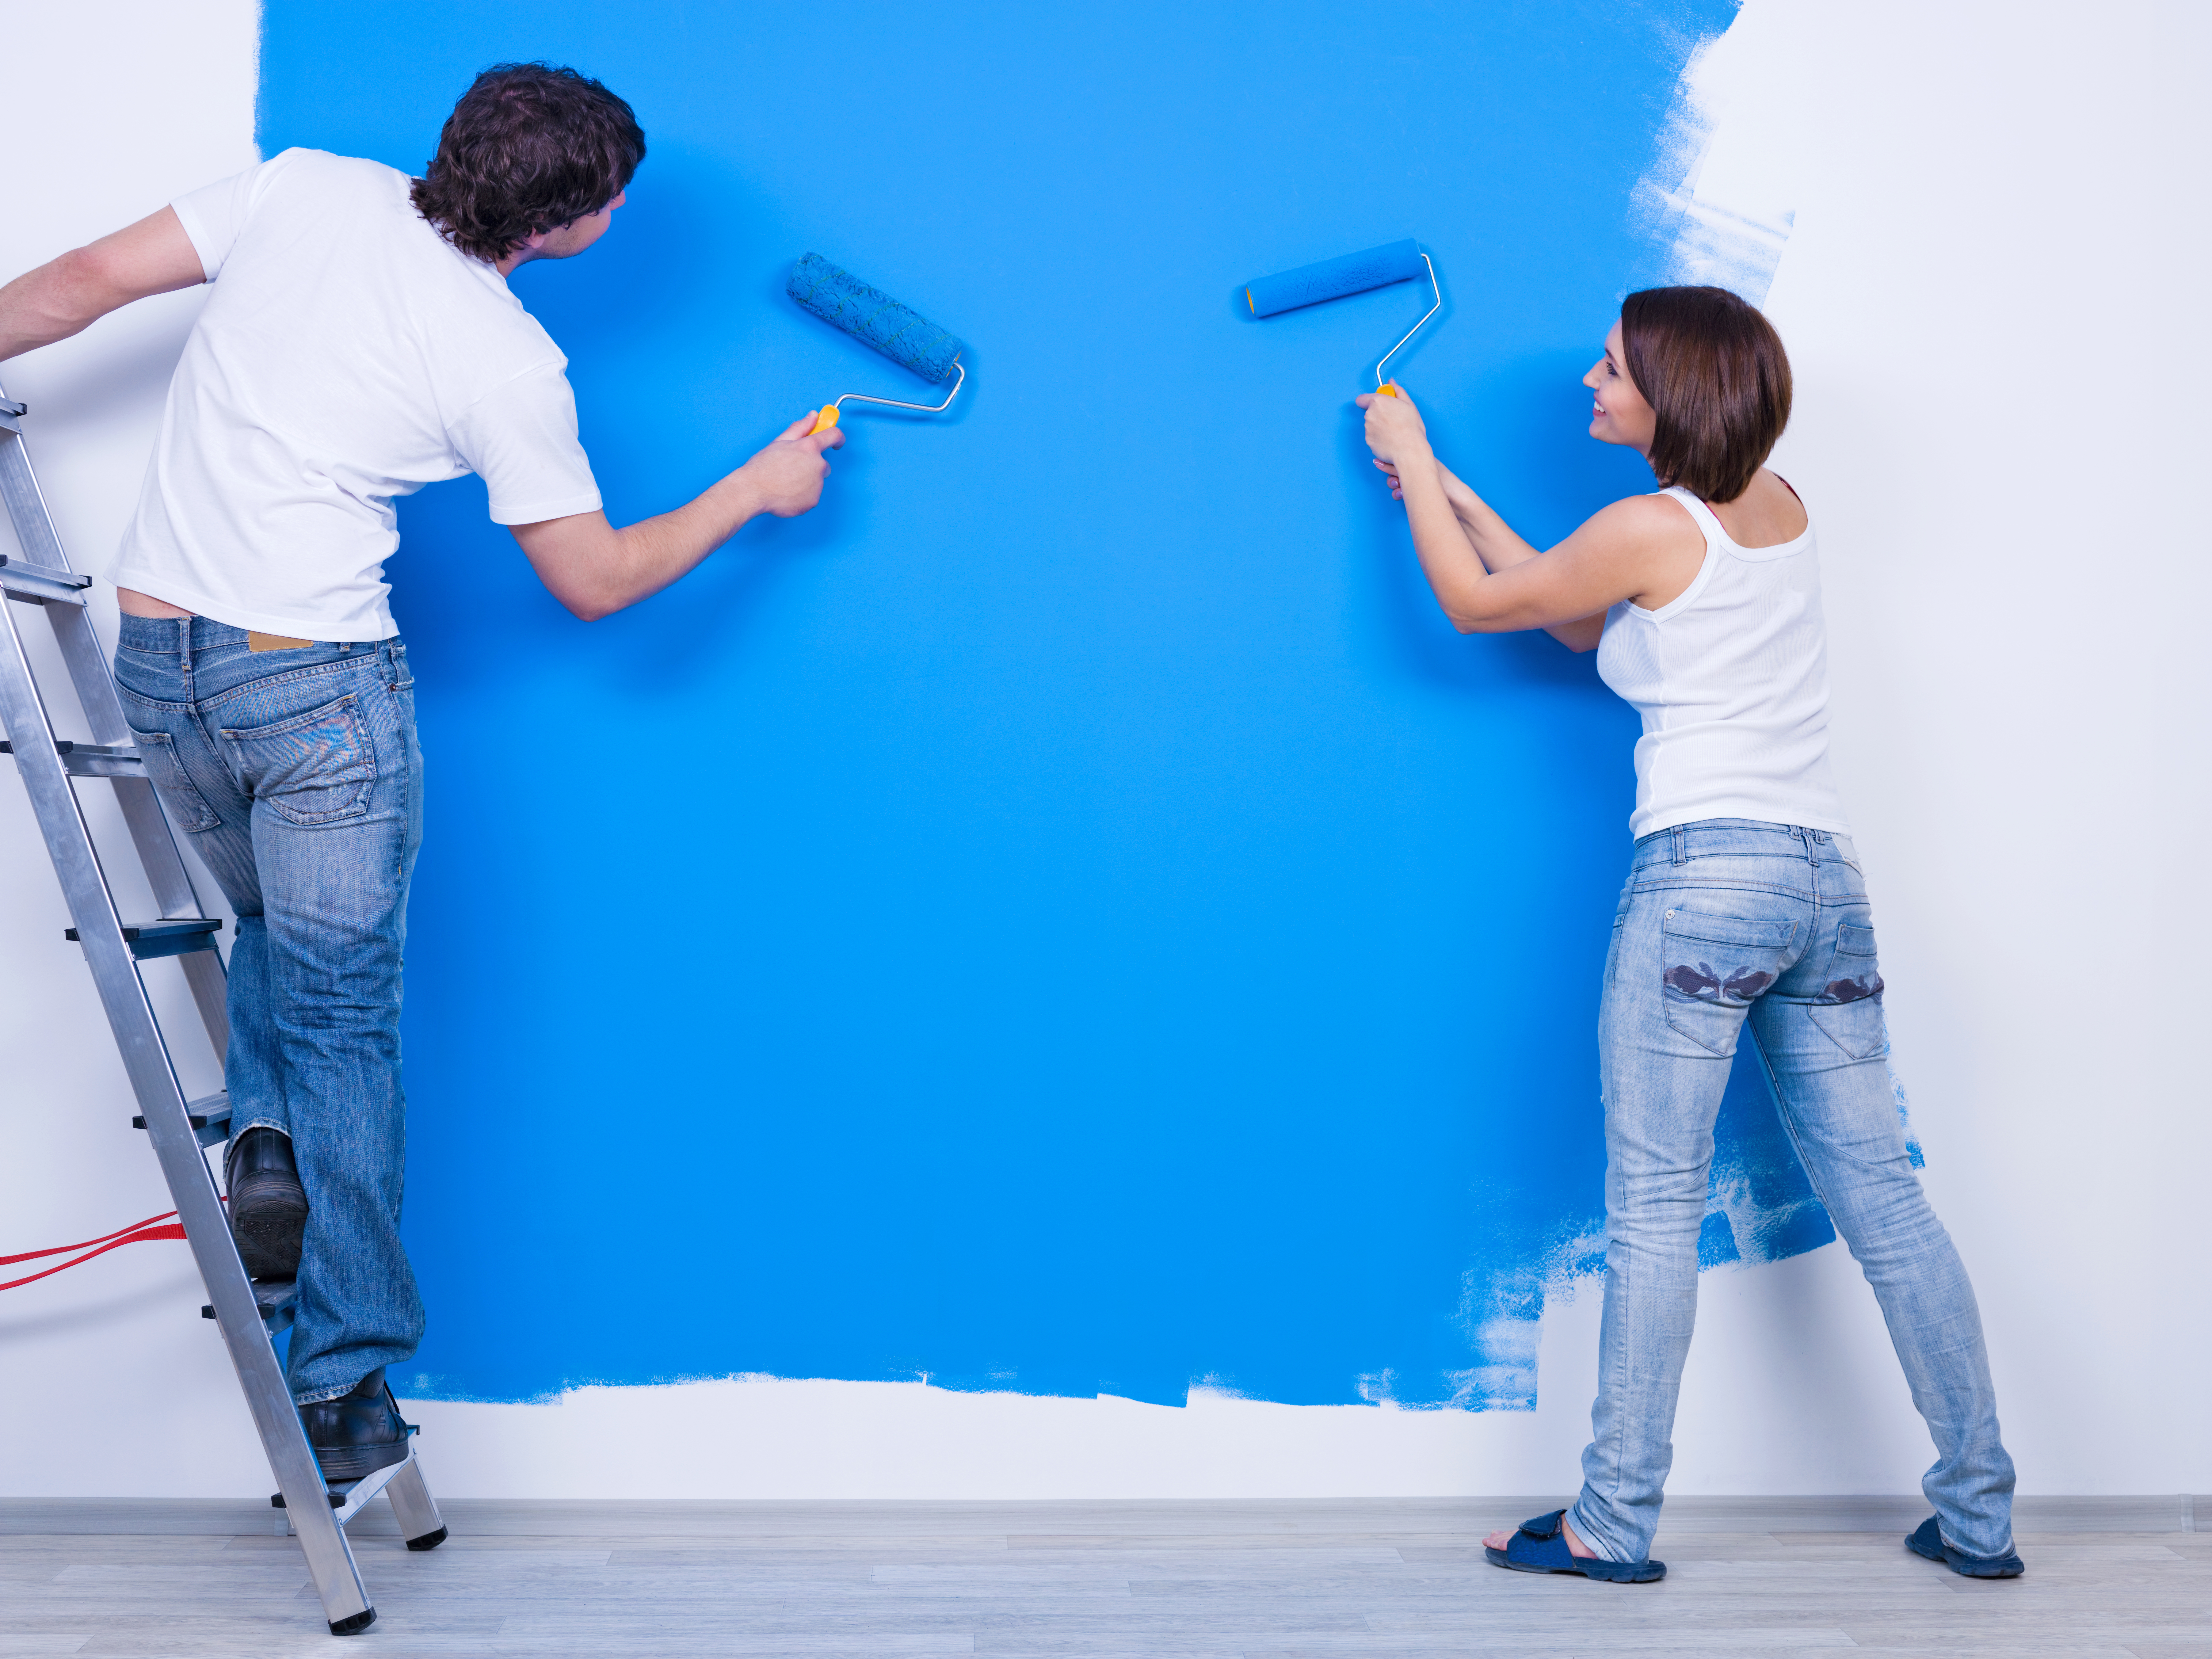 Coloring the wall in blue by young couple in casuals - horizontal
Imagen de valuavitaly en Freepik